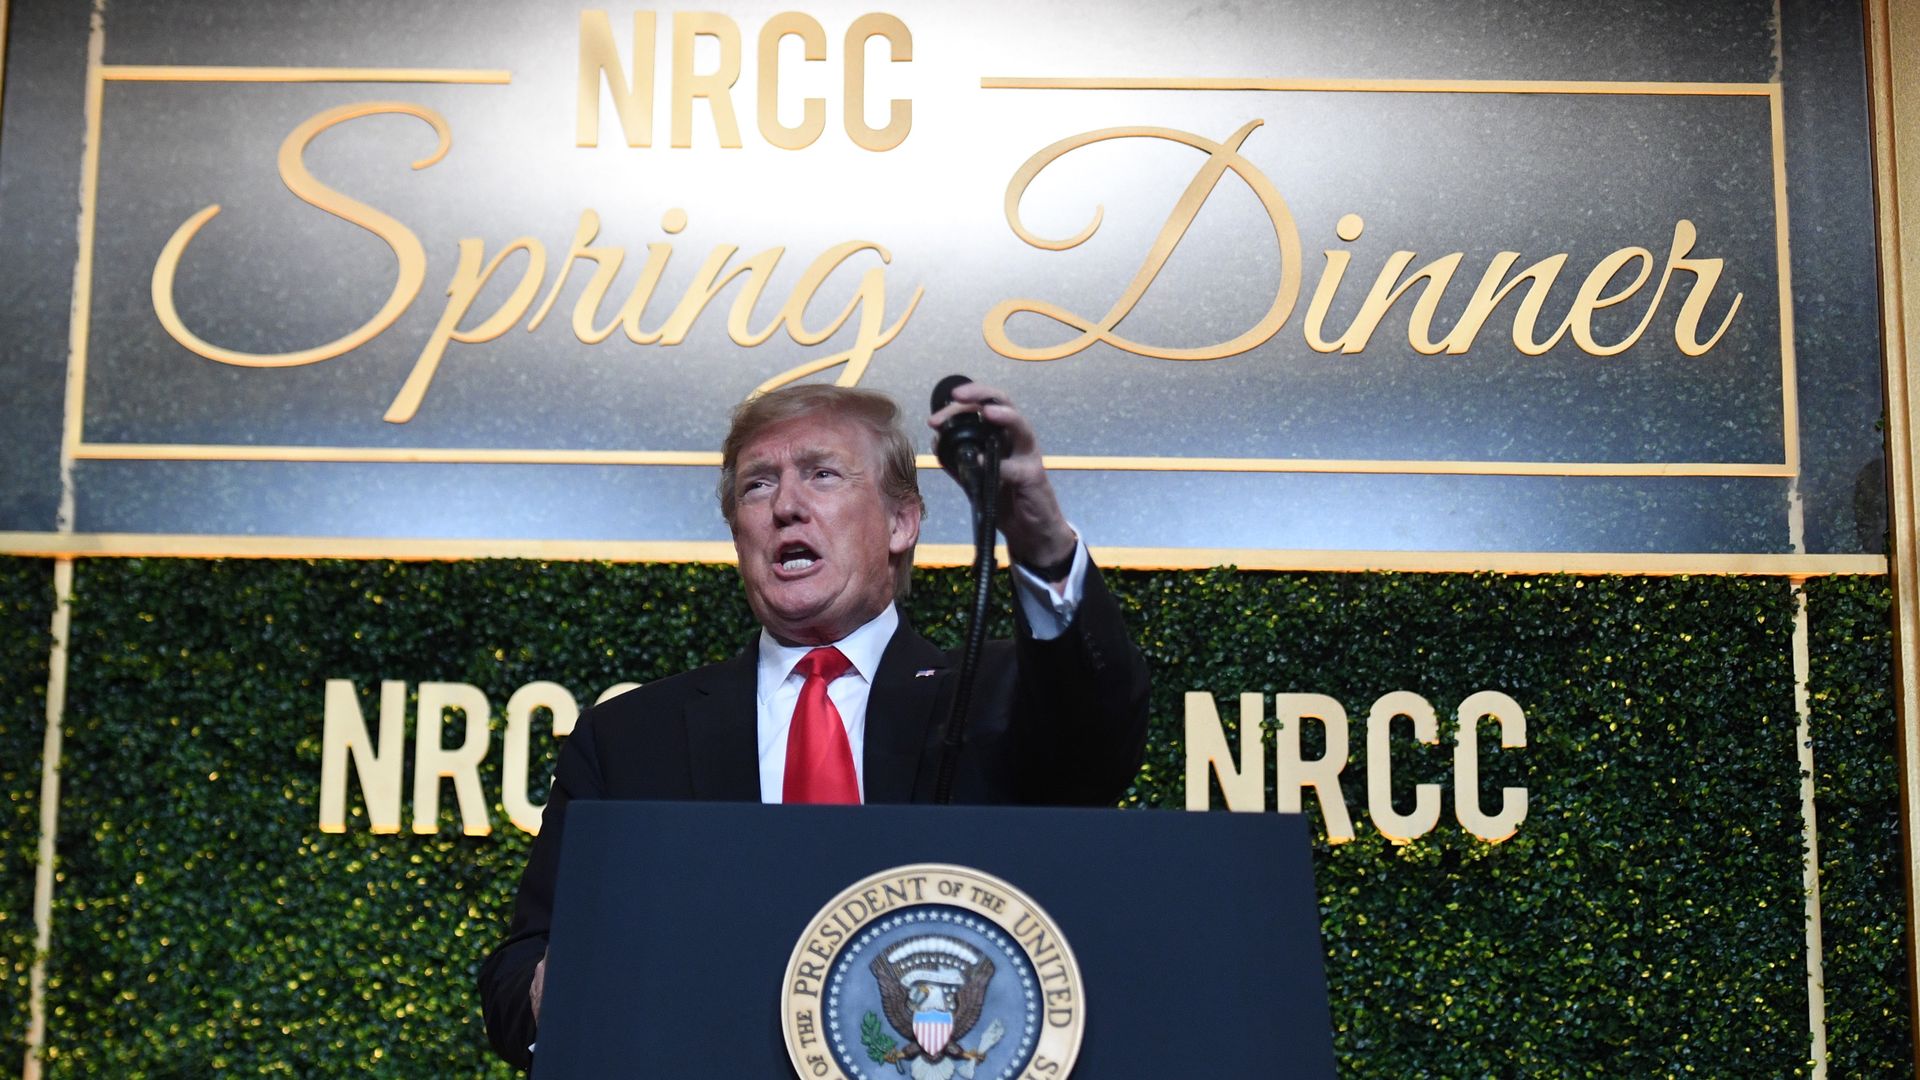 President Trump in full campaign mode at NRCC dinner.